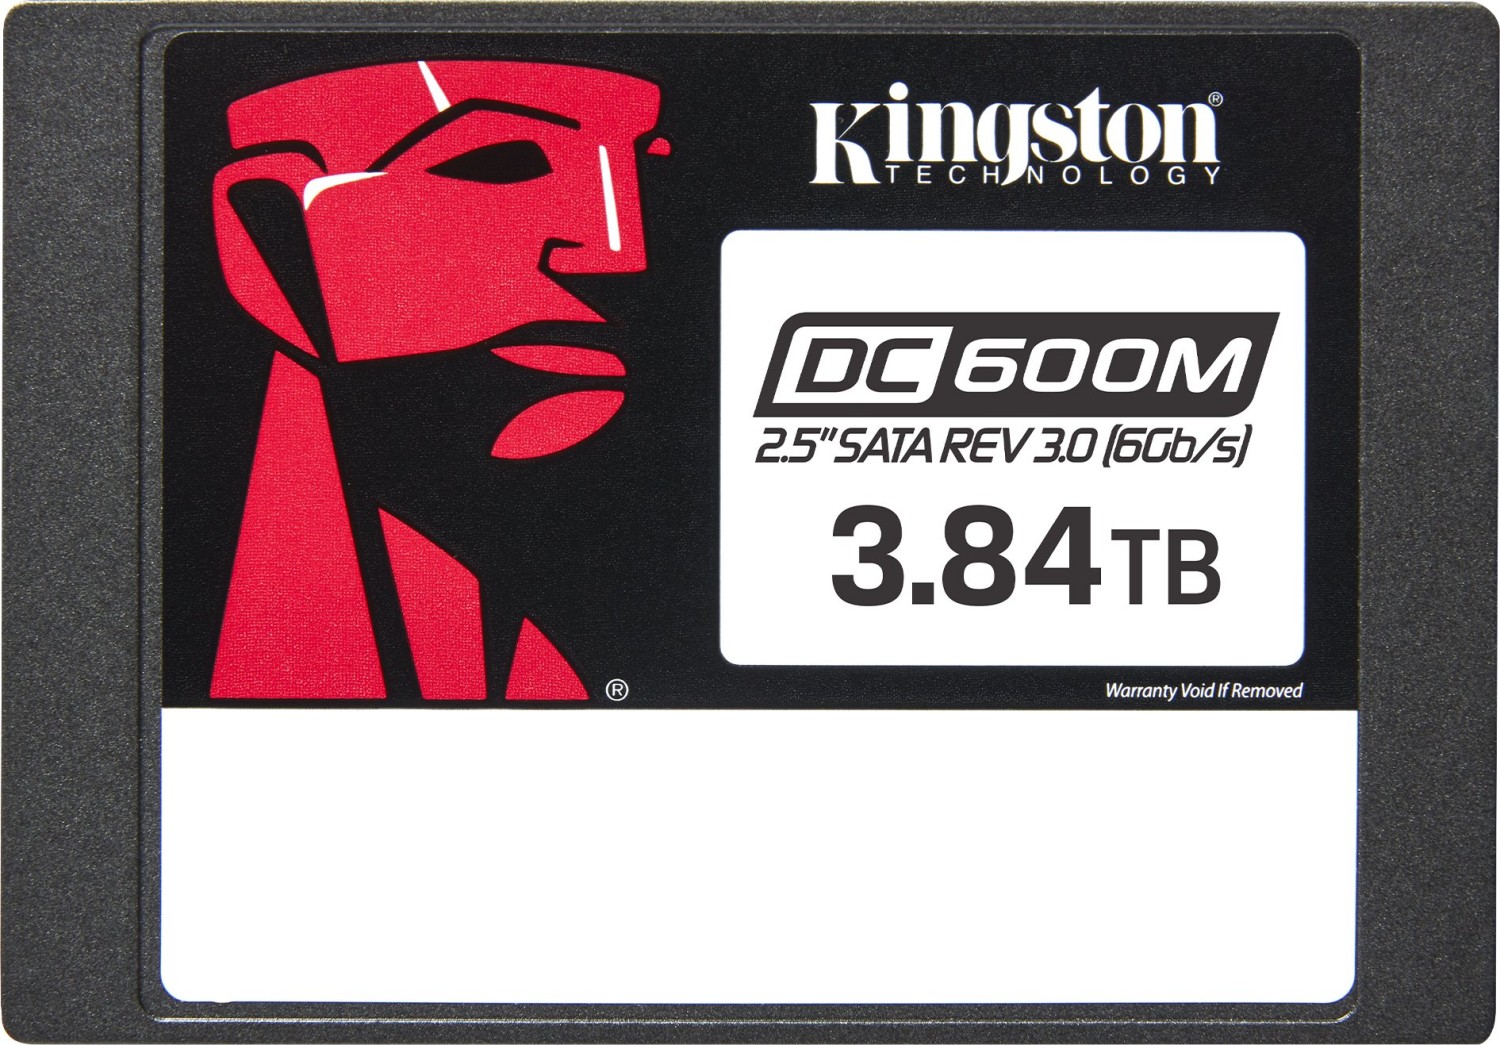 SSD Kingston SEDC600M 3.84TB SATA-III 2.5 inch image2